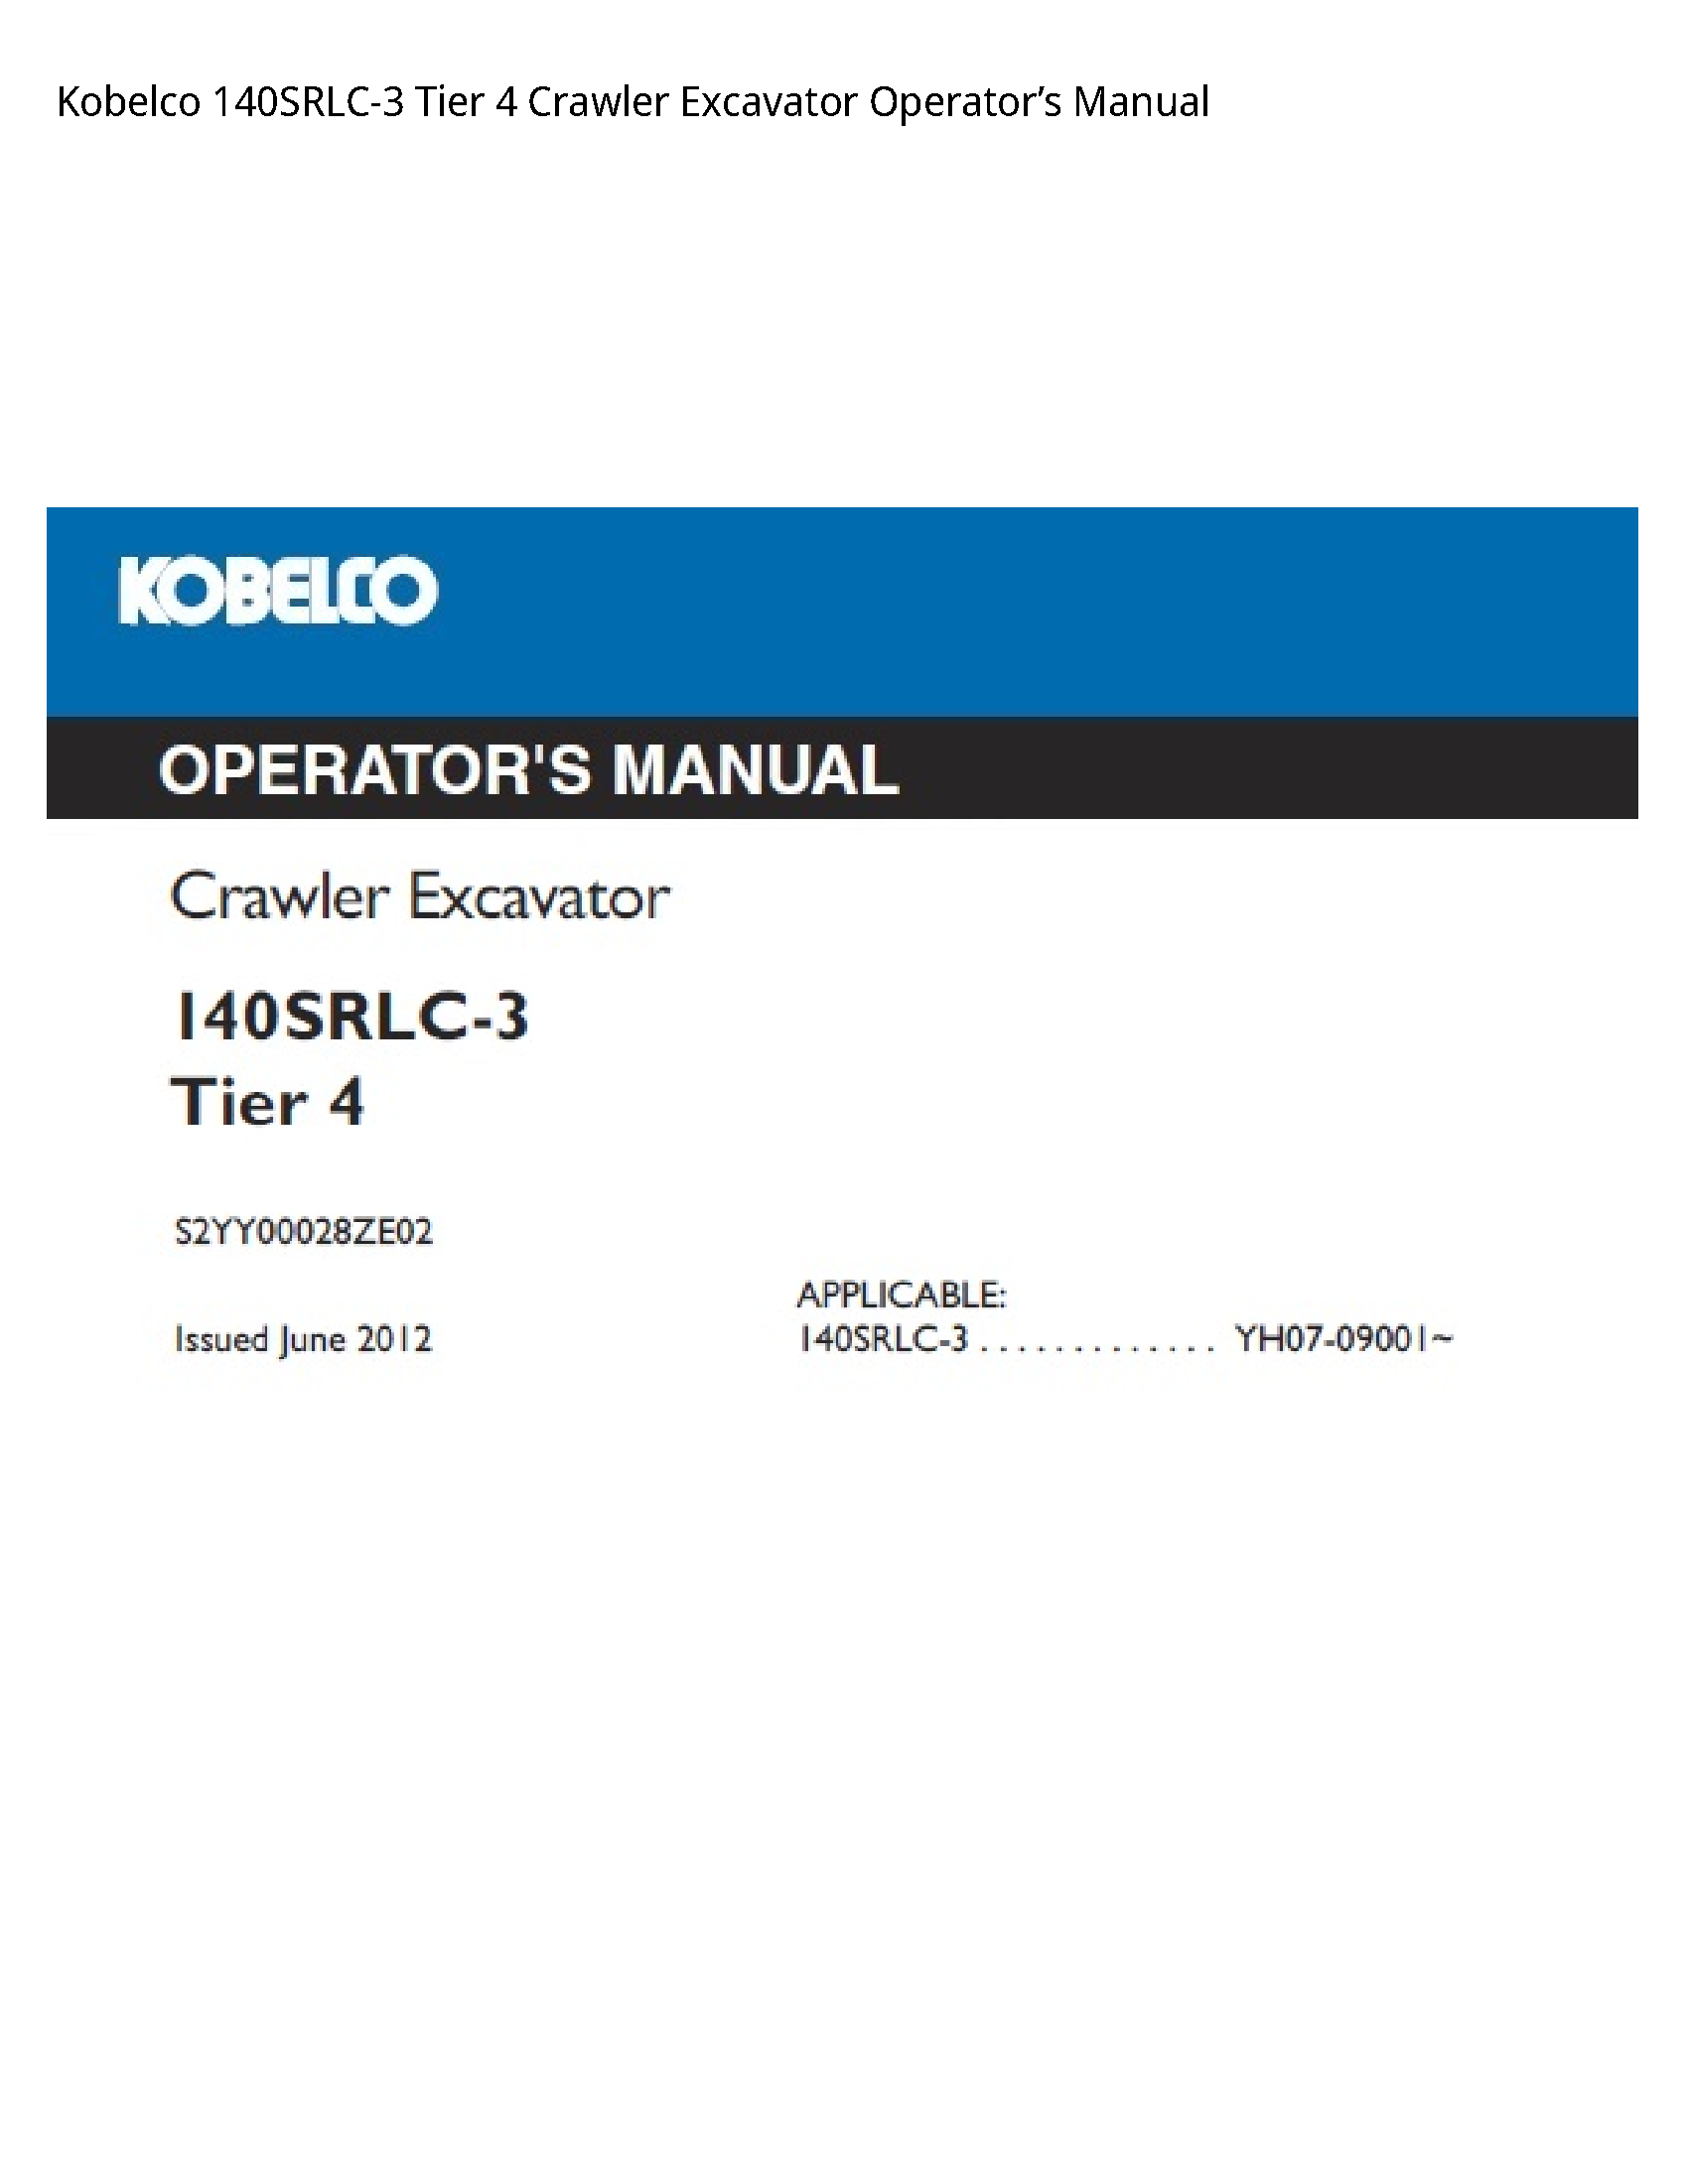 Kobelco 140SRLC-3 Tier Crawler Excavator Operator’s manual